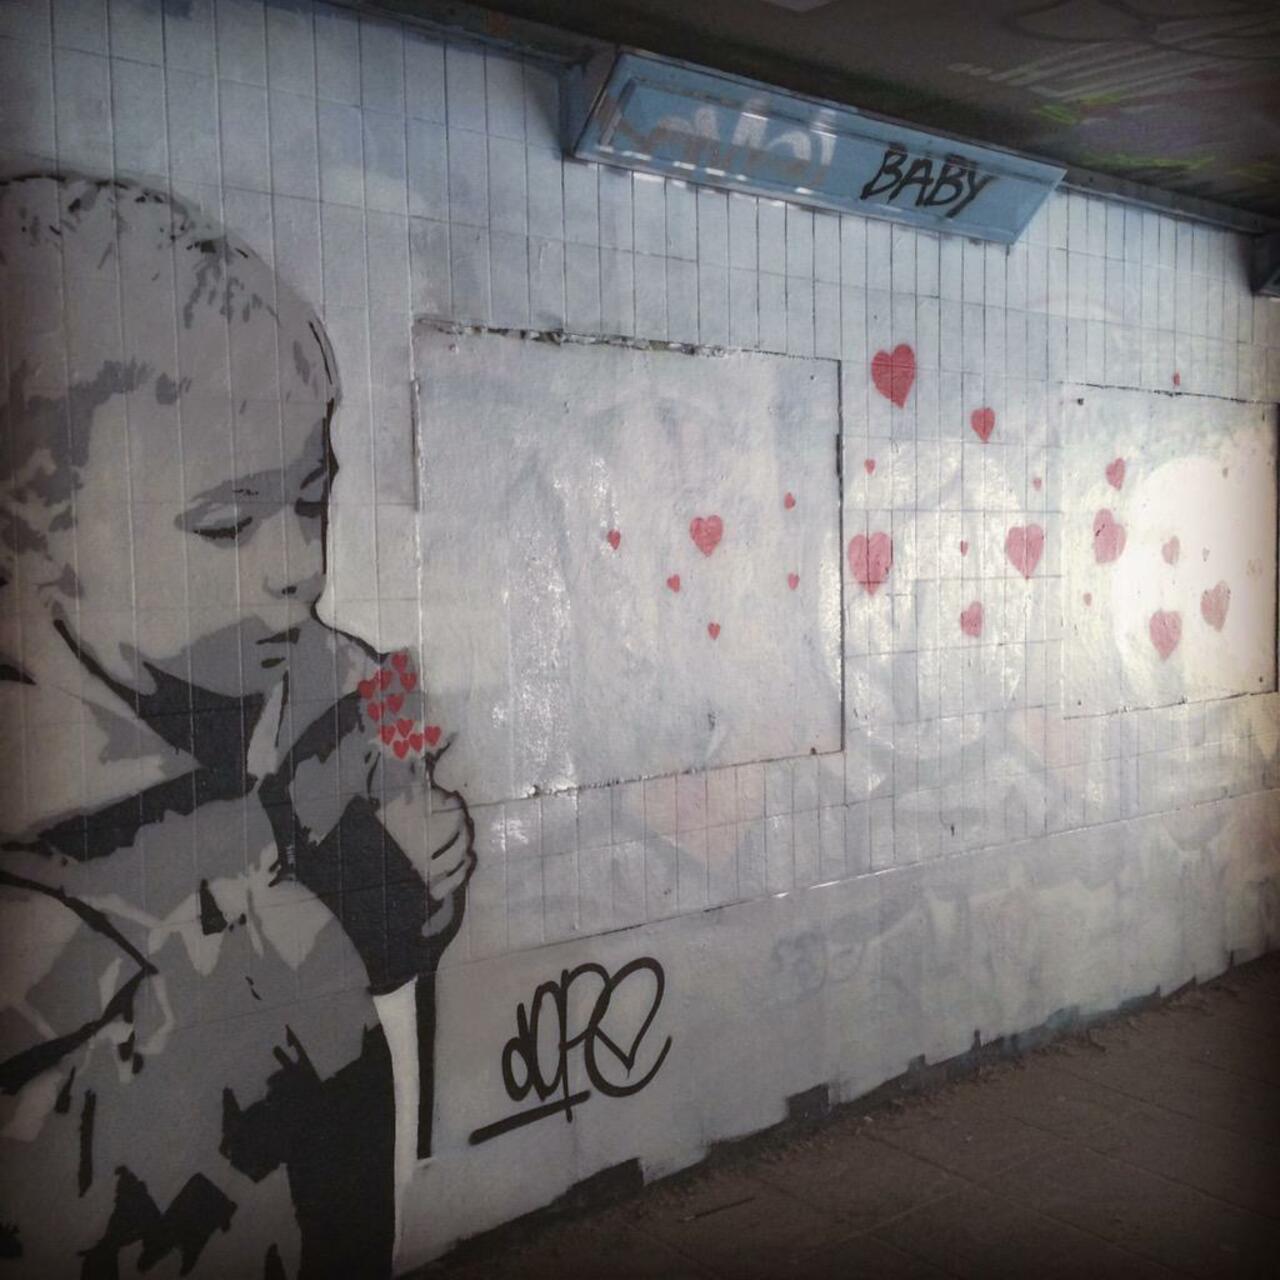 #leakestreet #dope #dopeism #streetart #lovehearts #love #graffiti #art http://t.co/6b3nB7dBYZ